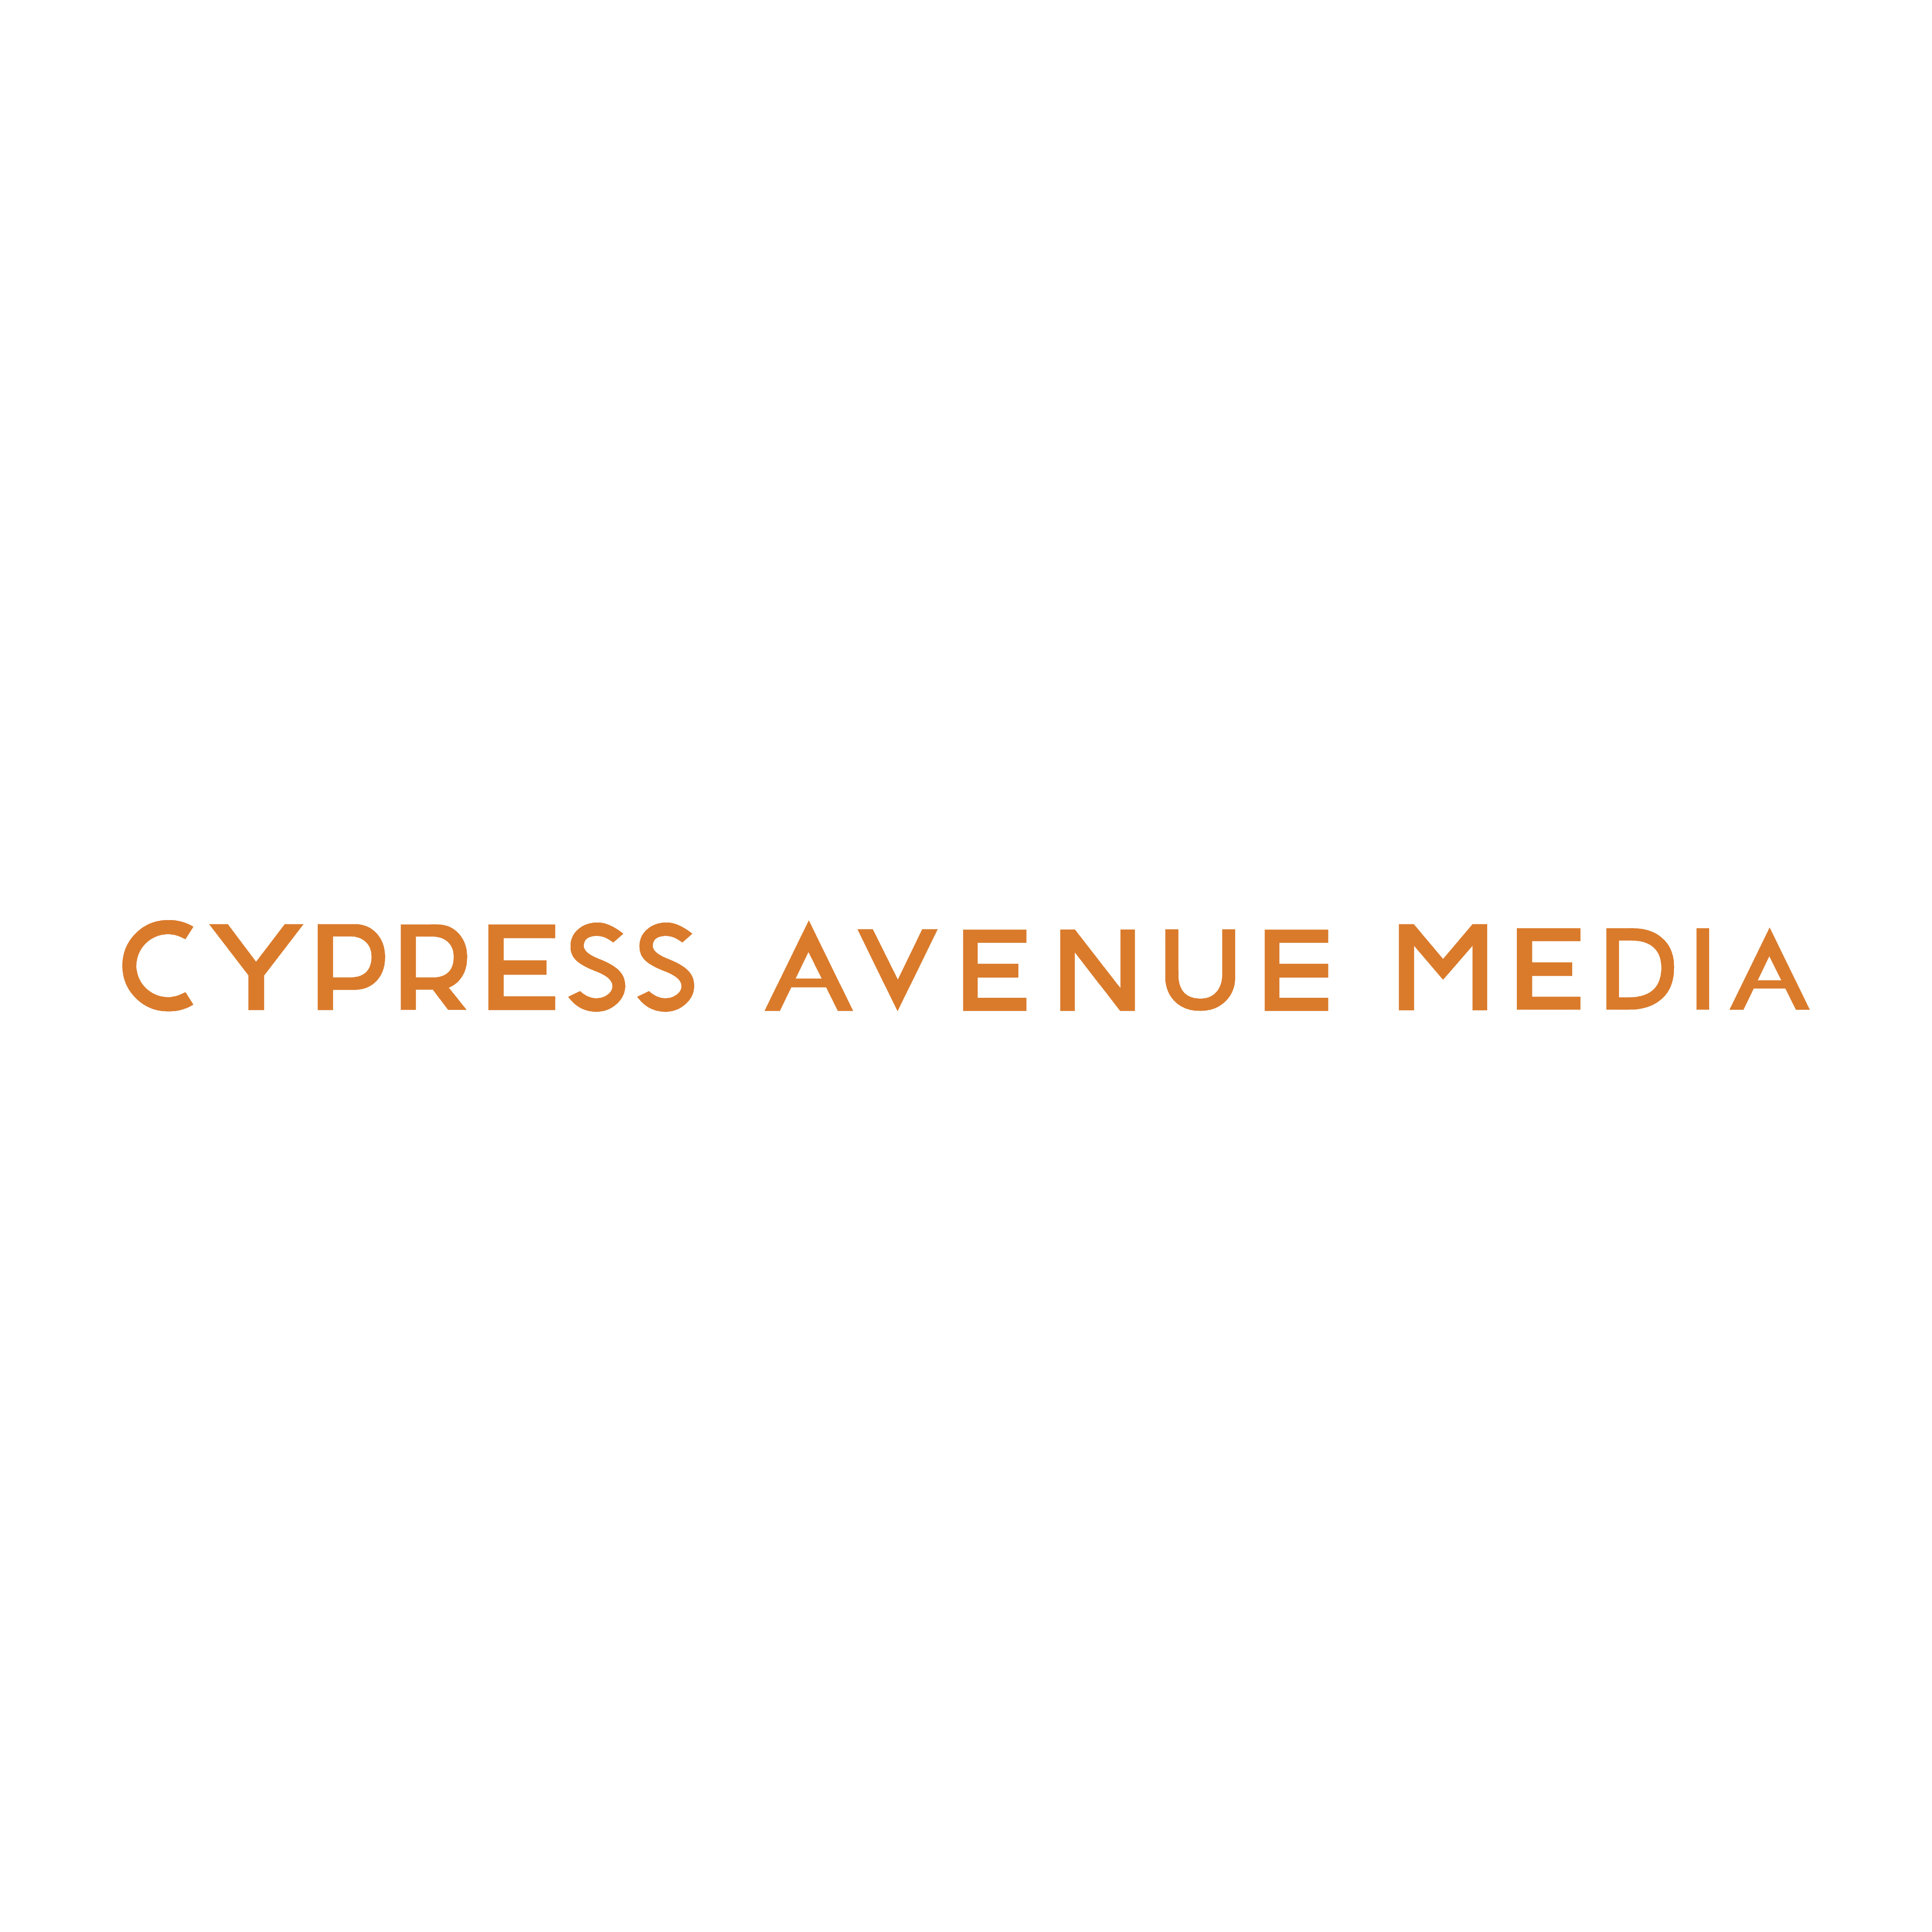 Cypress Avenue MEdia